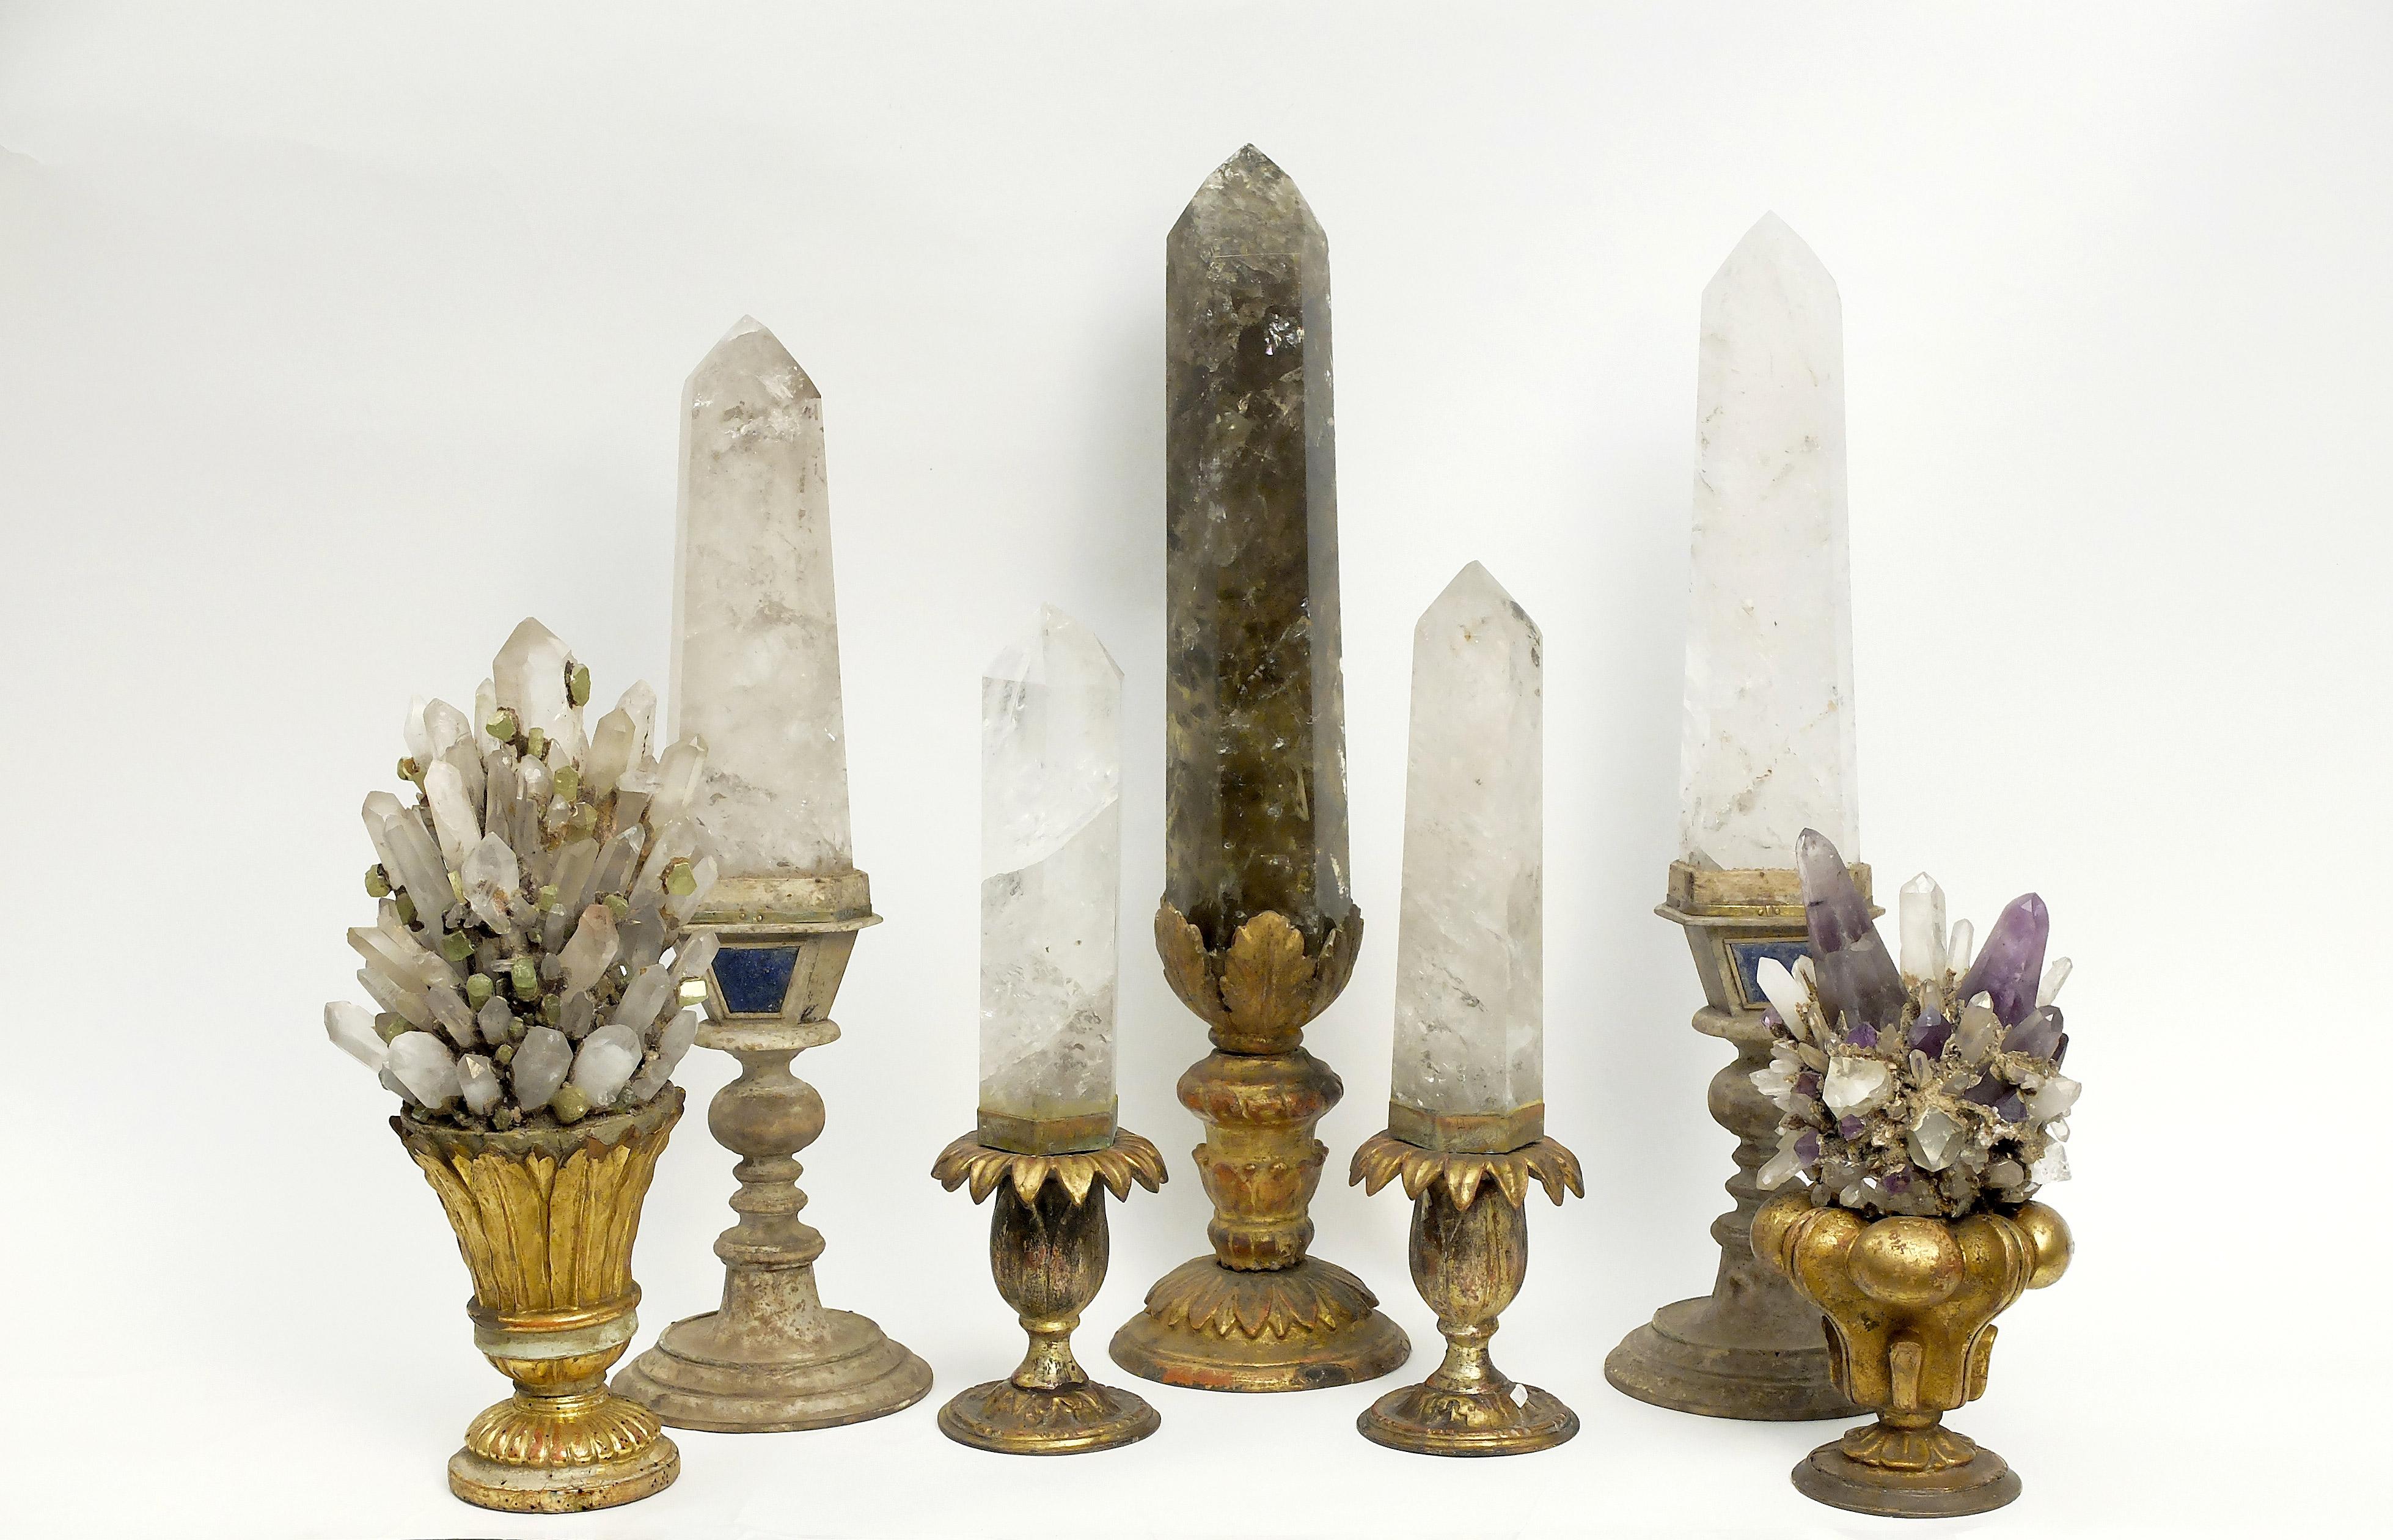 Late 19th Century Rare Pair of Rock Crystals, Wunderkammer Specimen of Naturalia, Italy